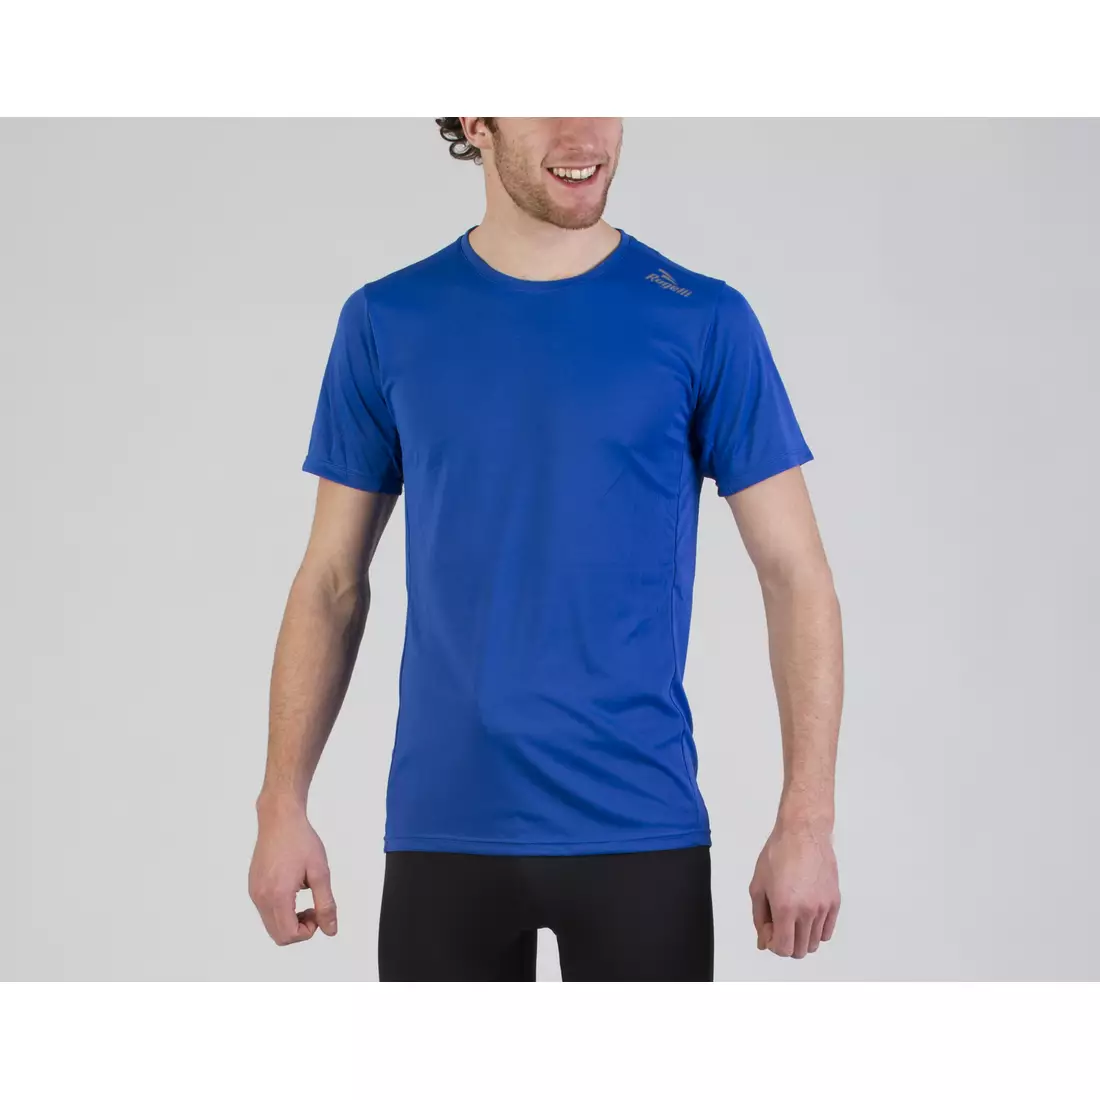 ROGELLI RUN BASIC - férfi futóing, 800.252 - kék